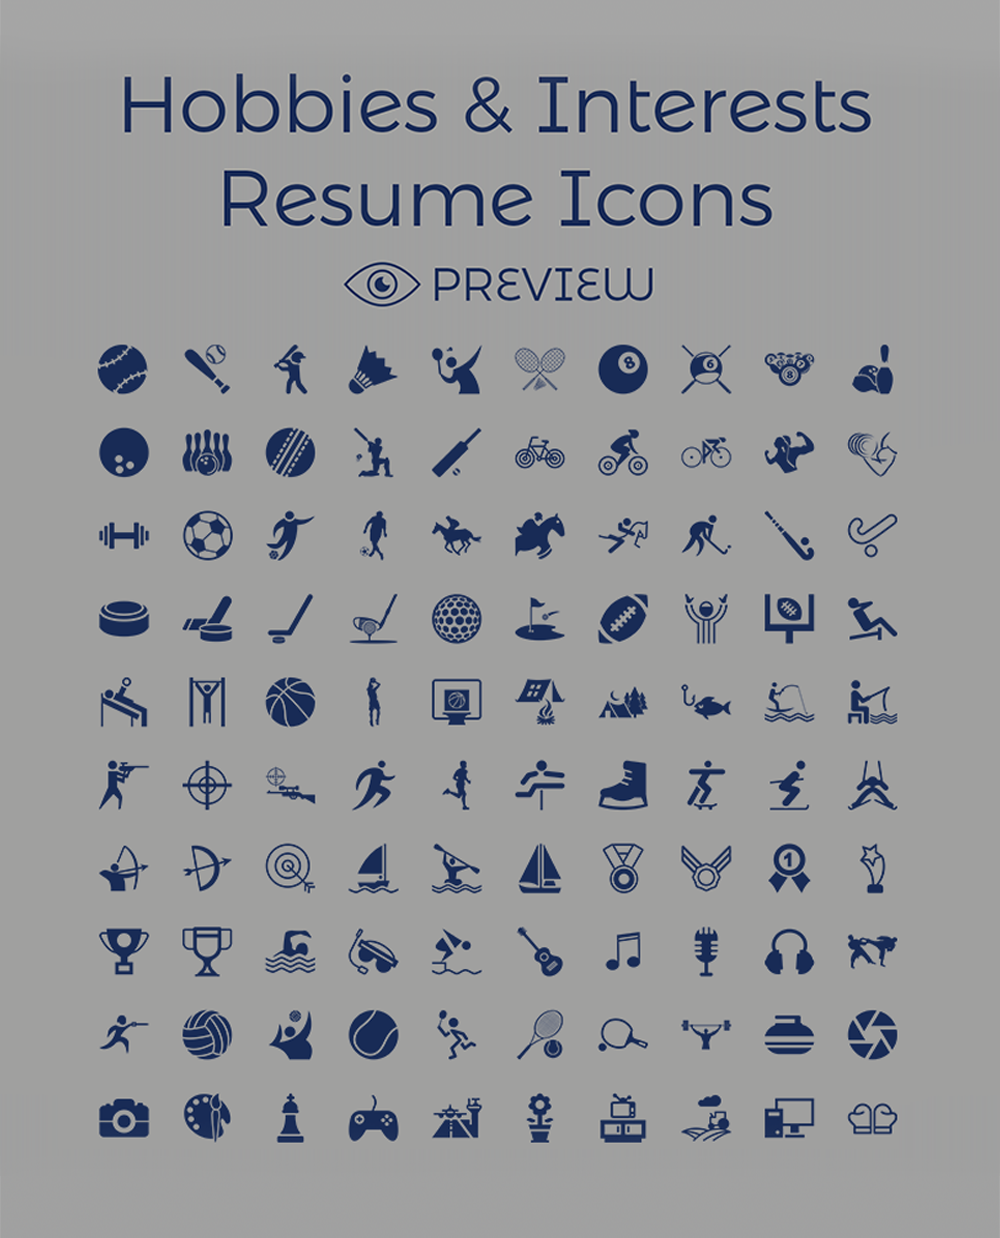 creative resume  cv  design  cover letter template  4 psd mock-ups  u0026 100 resume icons